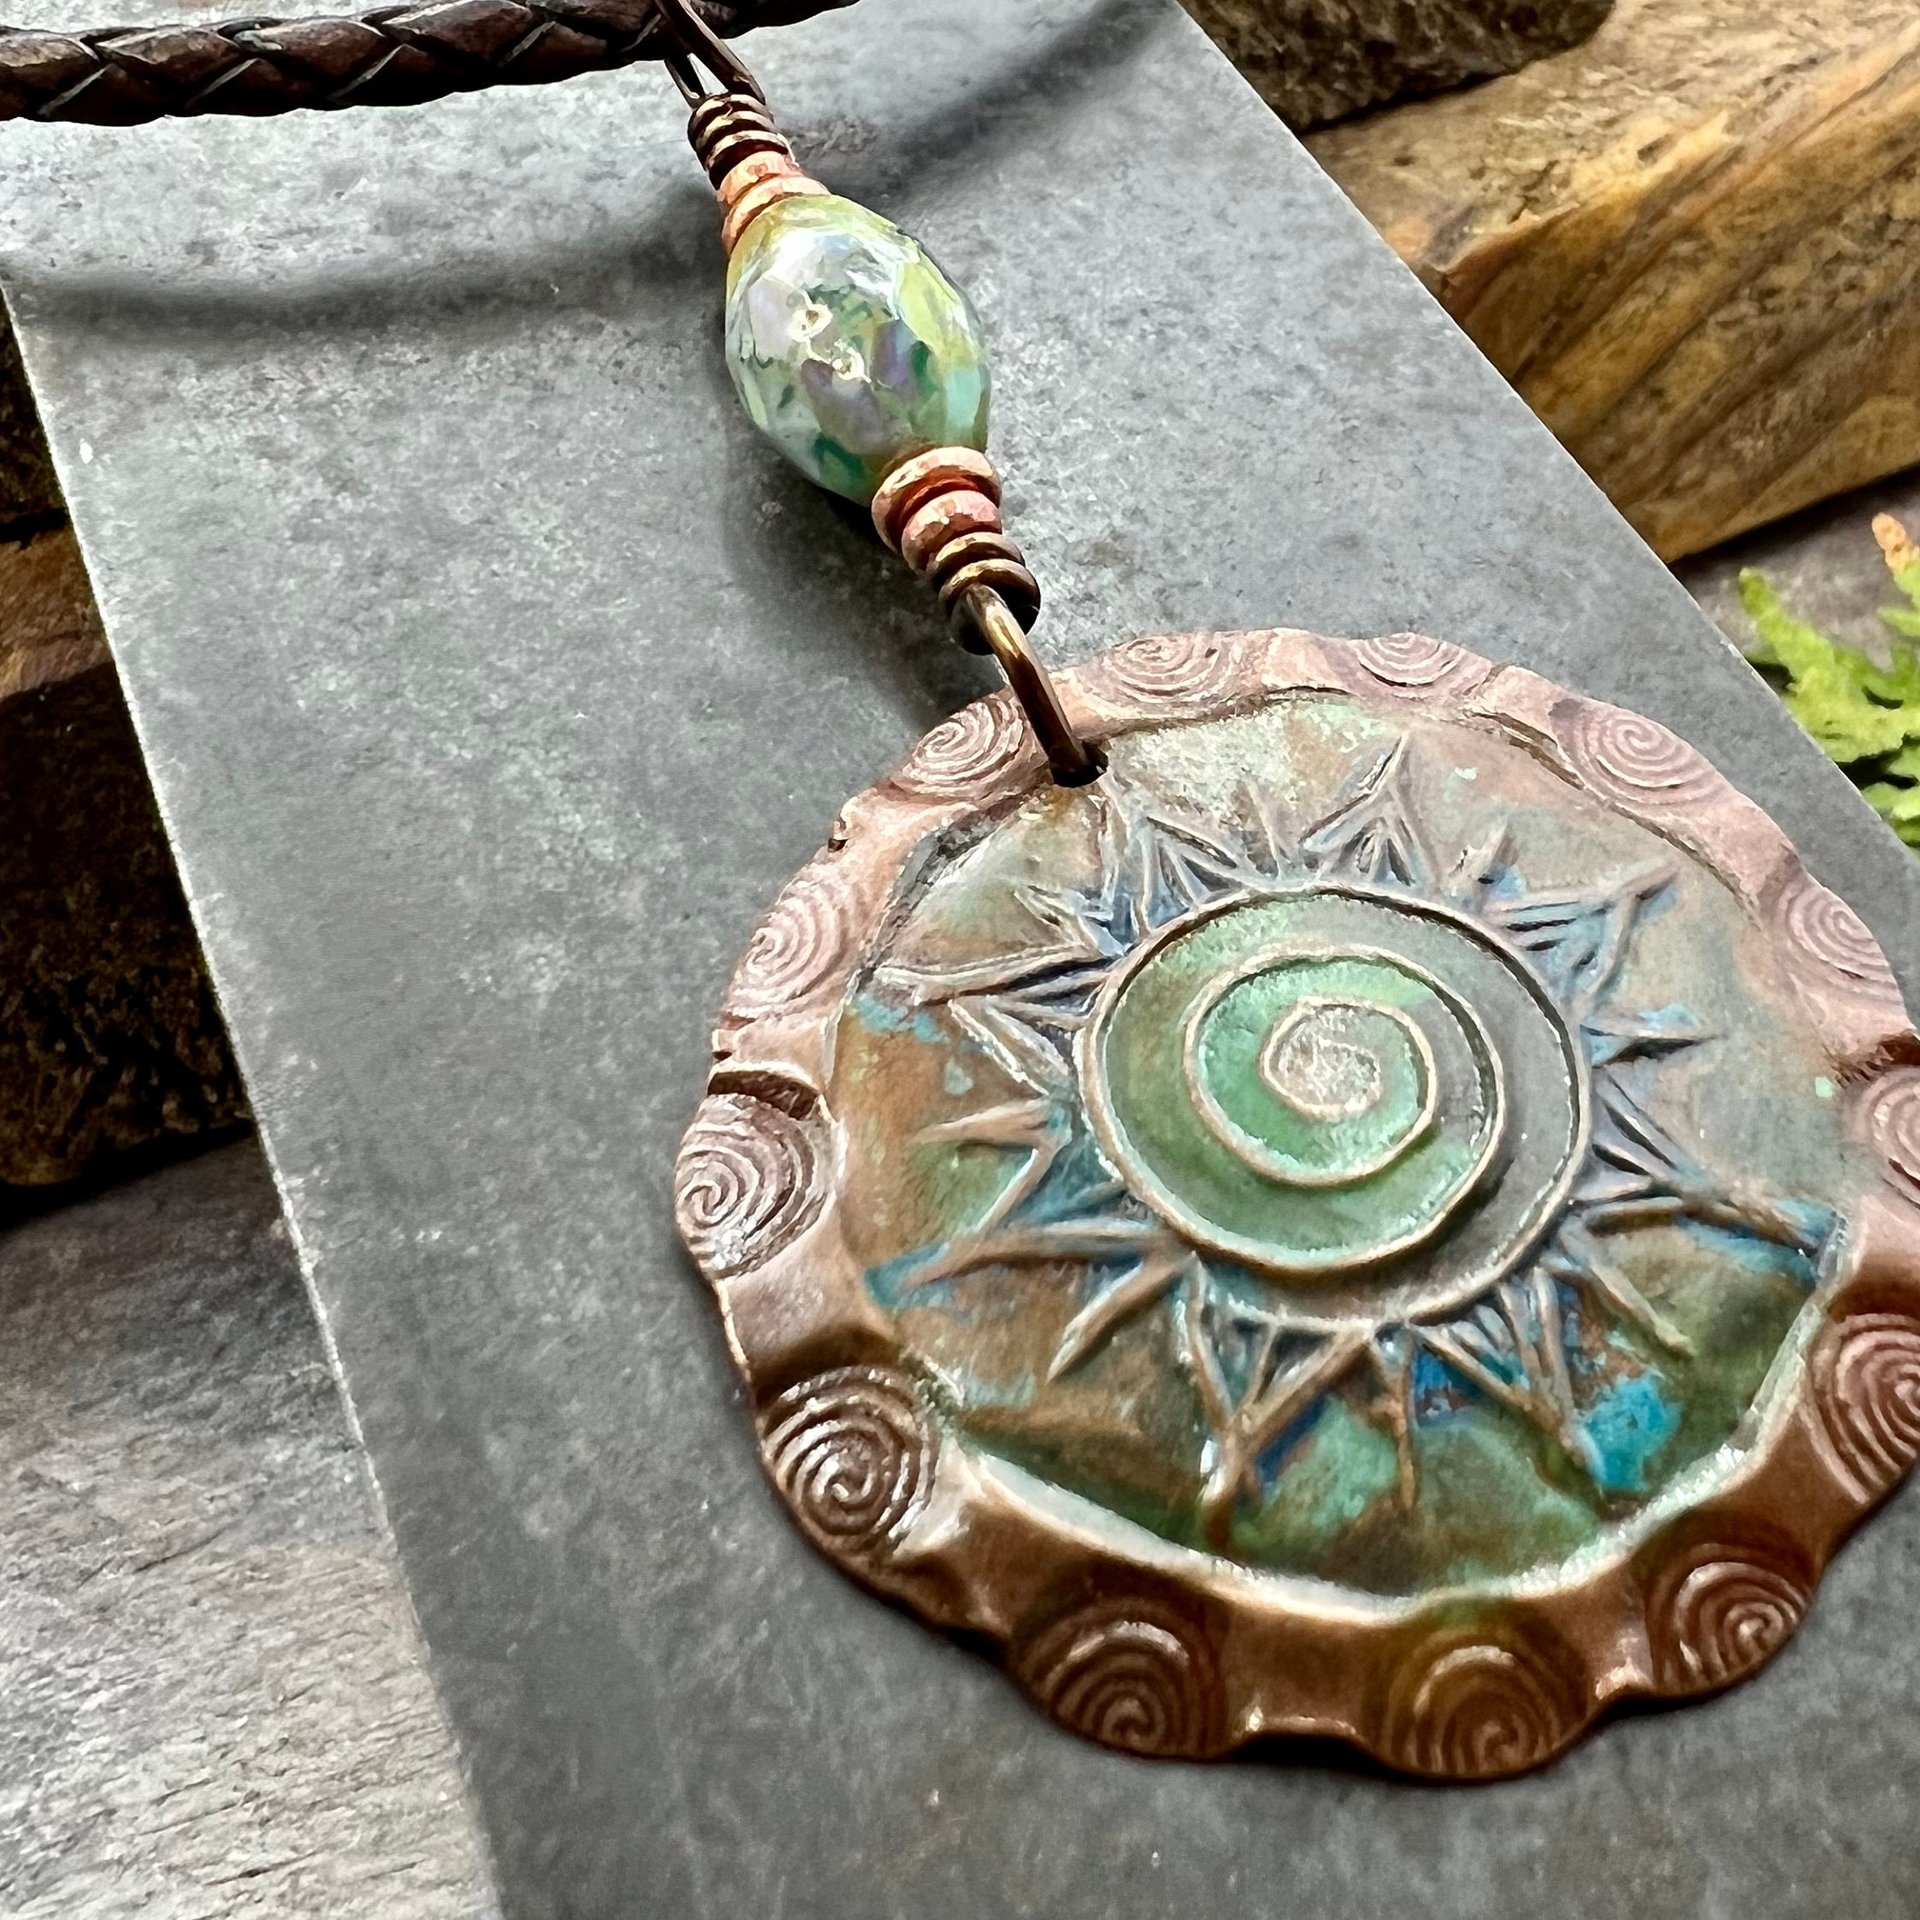 Celtic Sun Spiral Necklace, Copper Charm, Irish Celtic Spirals, Patina Colors, Czech Glass, Leather & Vegan Cords, Earthy Rustic Art Jewelry